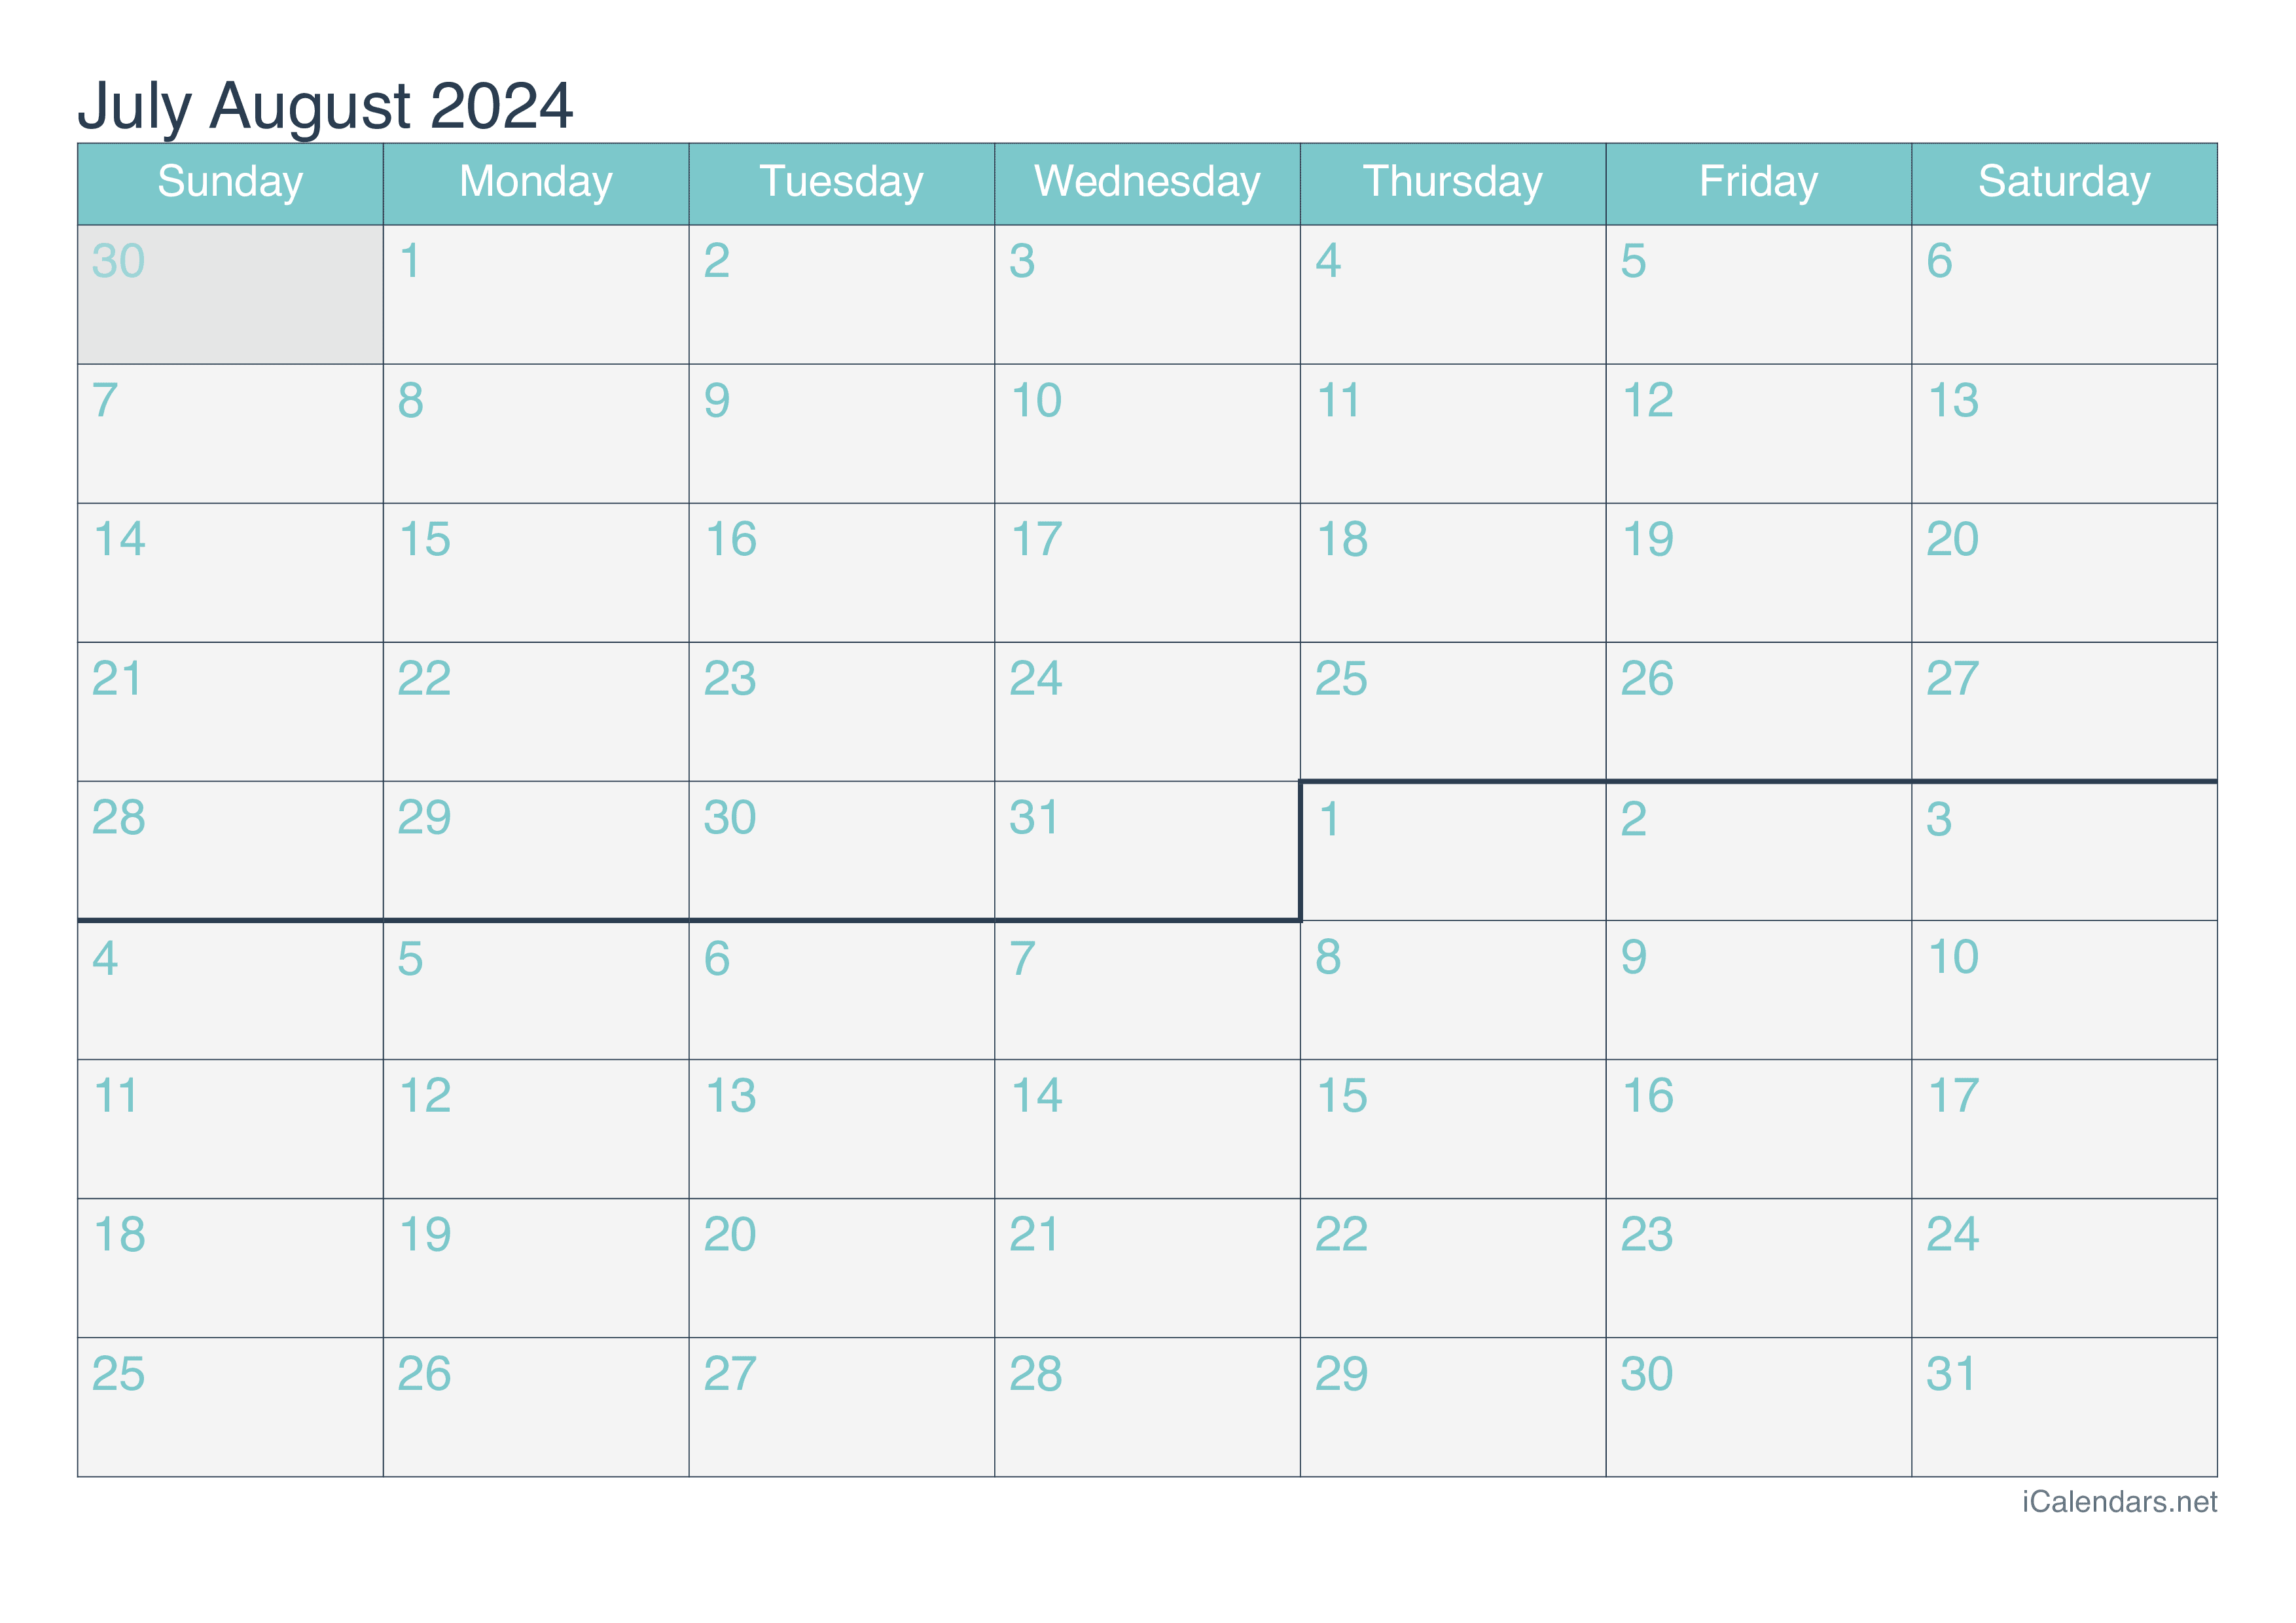 July And August 2024 Printable Calendar regarding Calendar For The Month Of July And August 2024